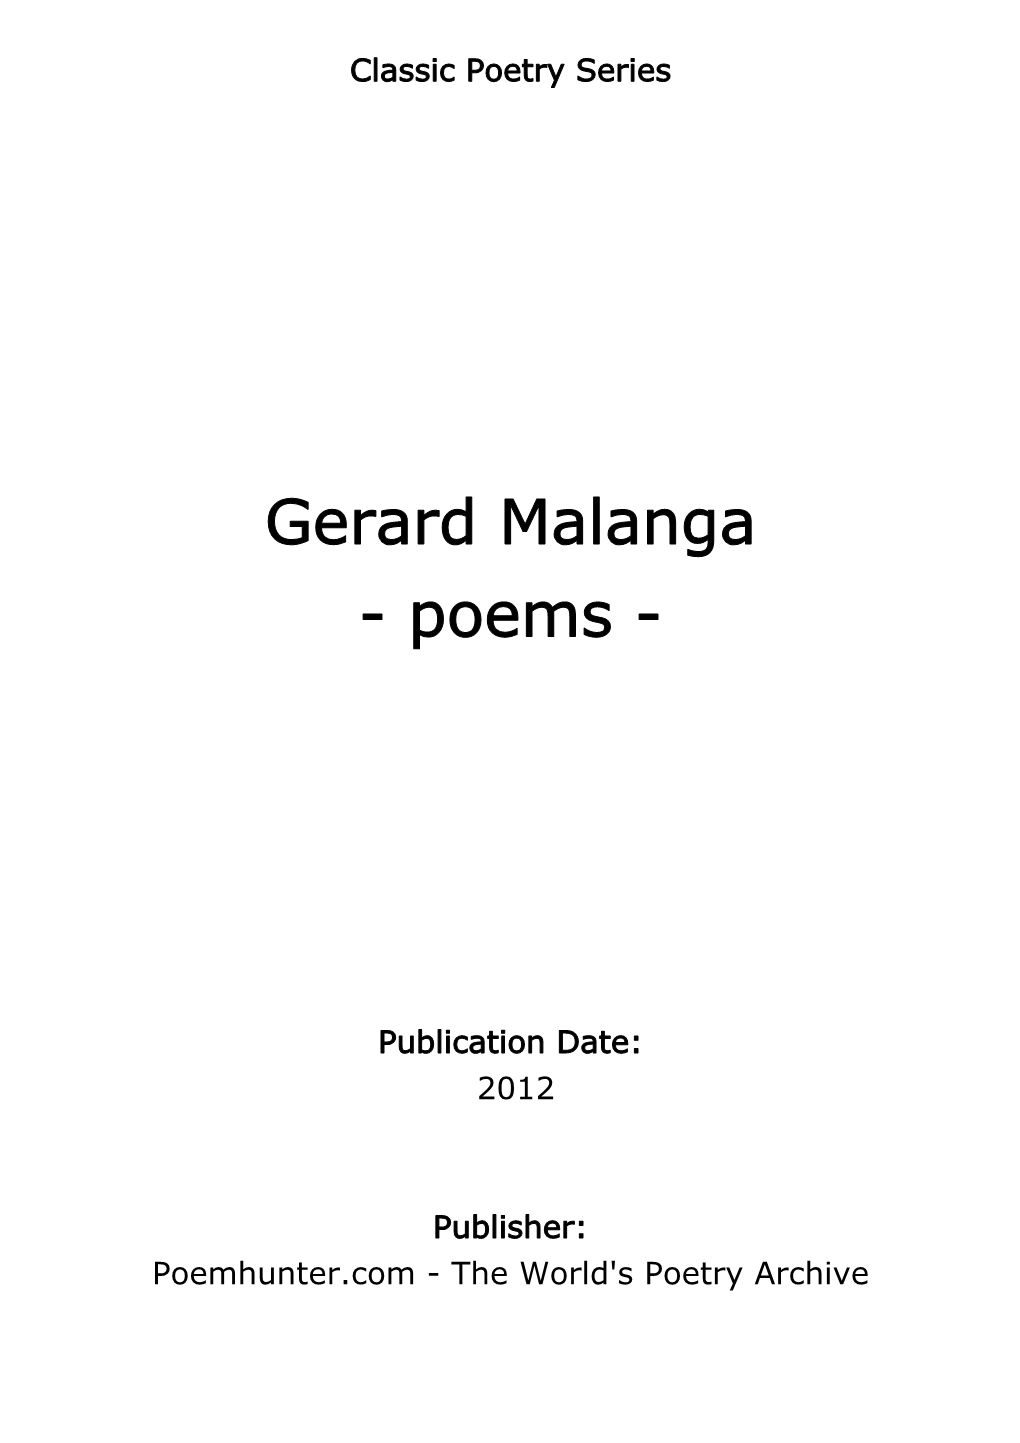 Gerard Malanga - Poems